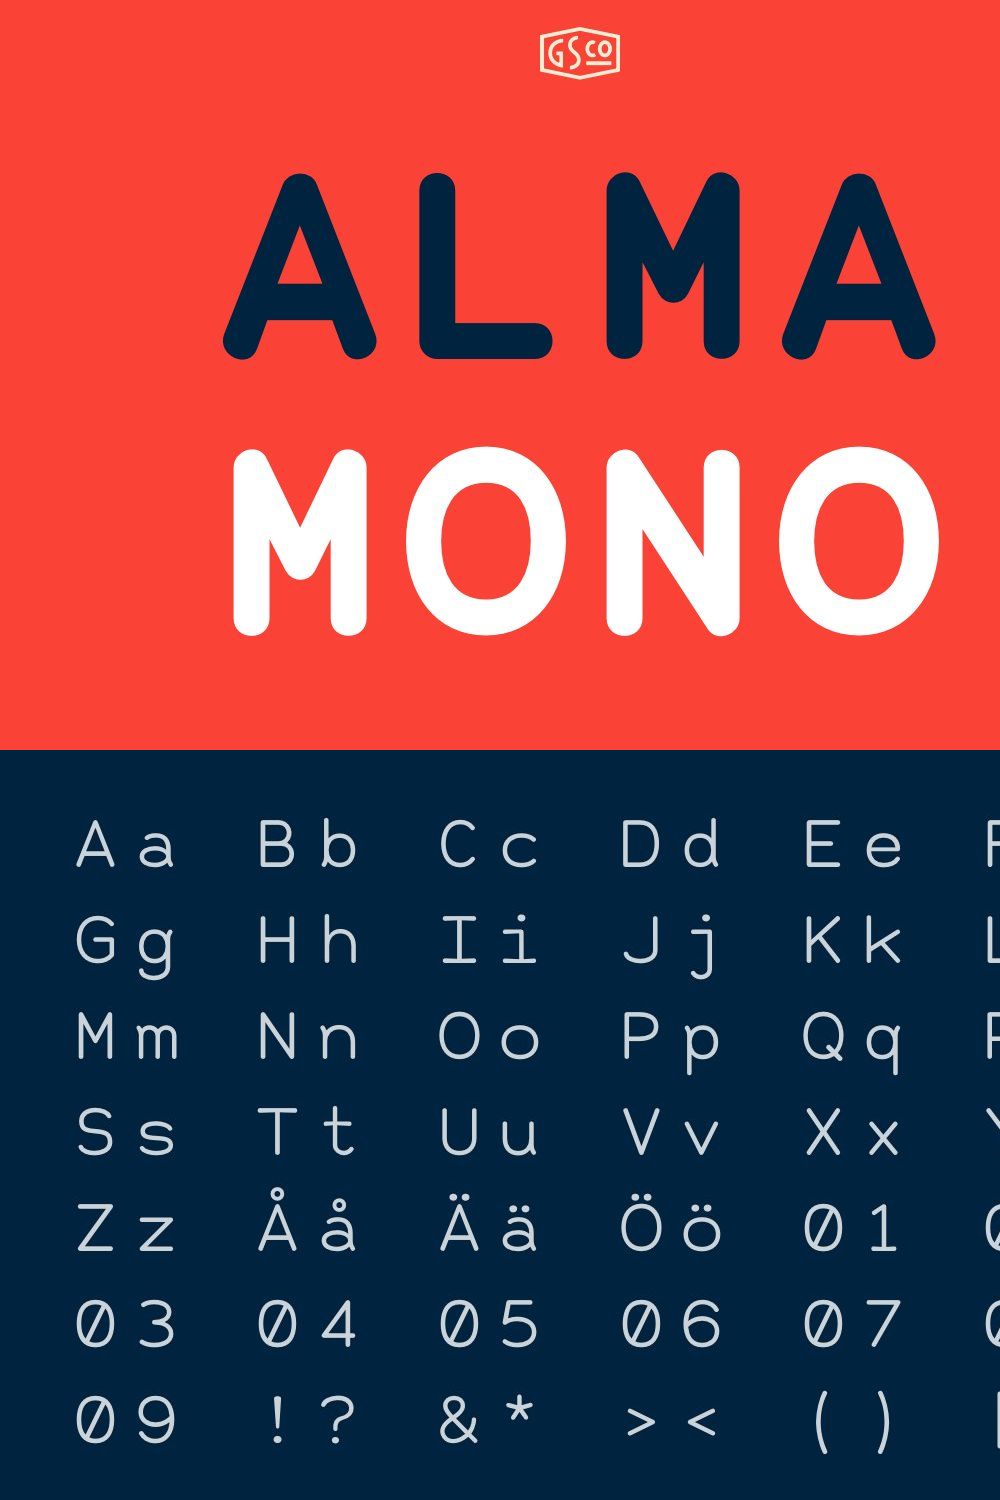 Alma Mono - A monospaced sans serif pinterest preview image.